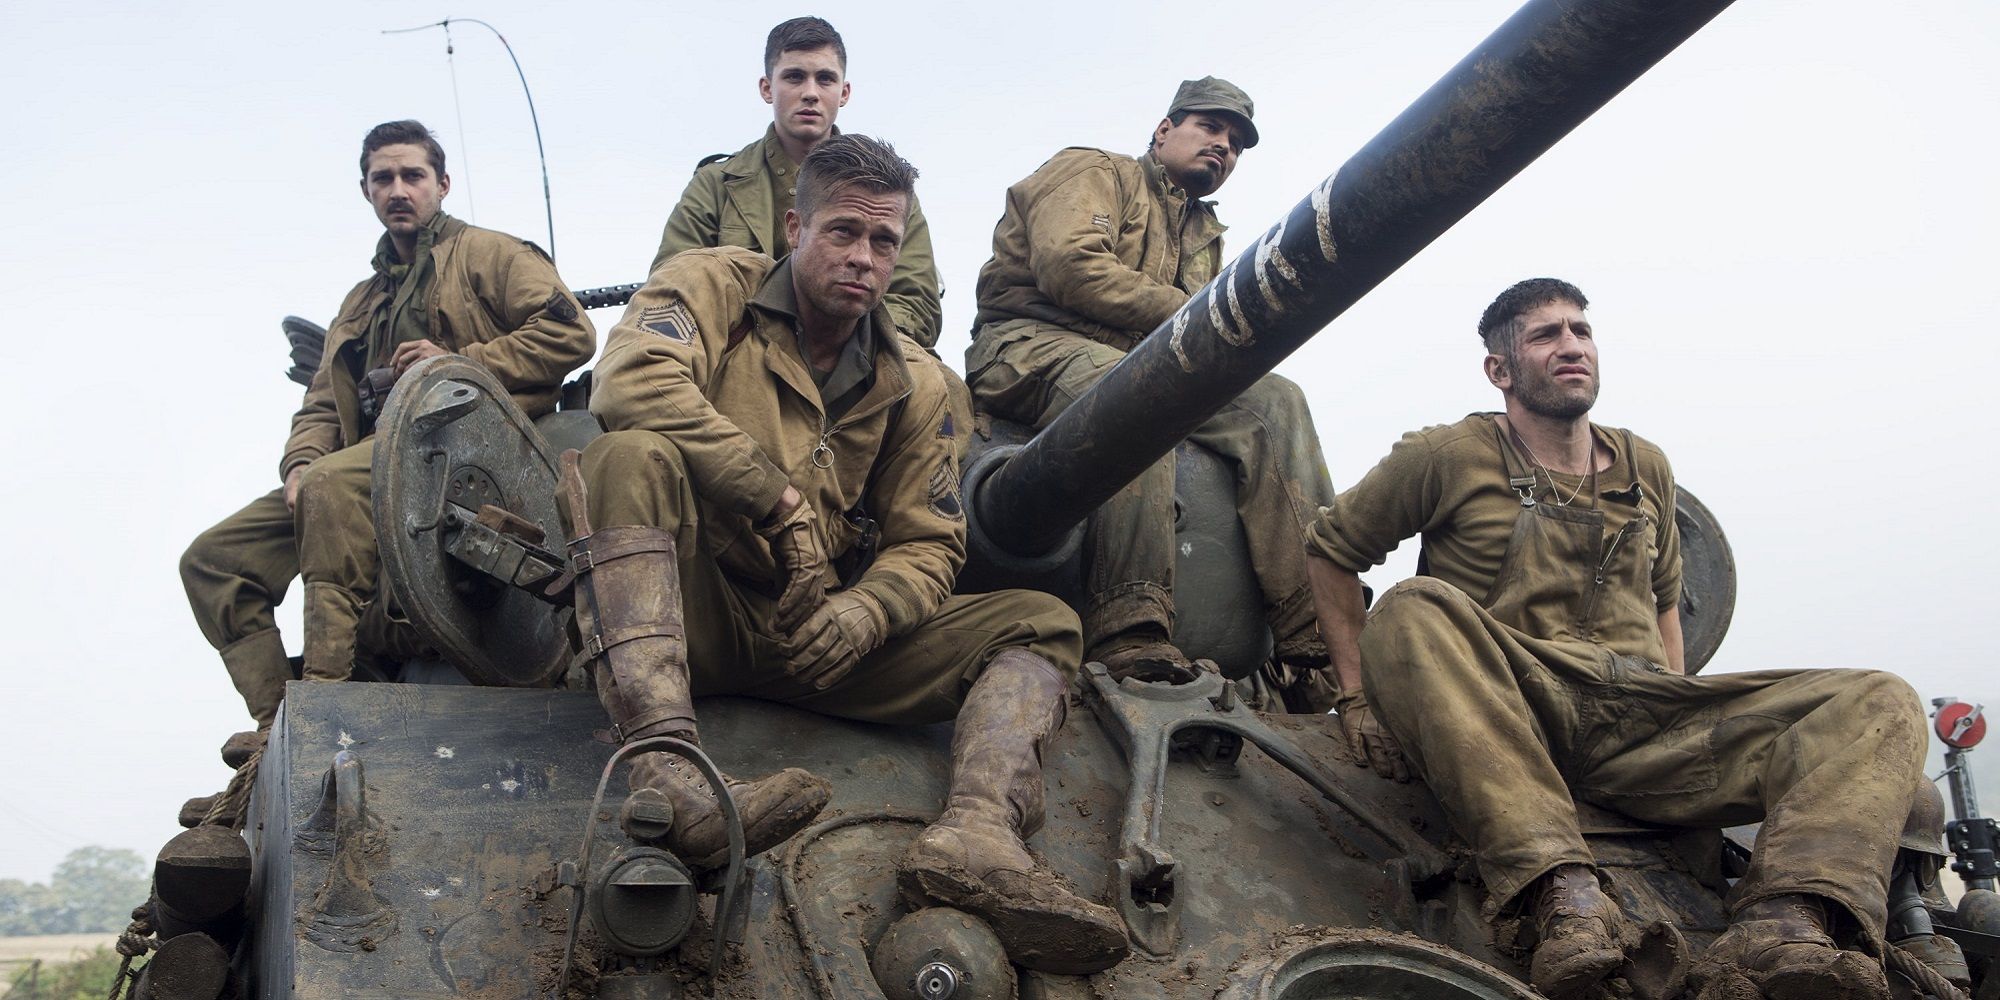 The tank crew (Brad Pitt, Shia LaBeouf, Jon Bernthal, Michael Pena, Logan Lerman) sit on a tank in Fury